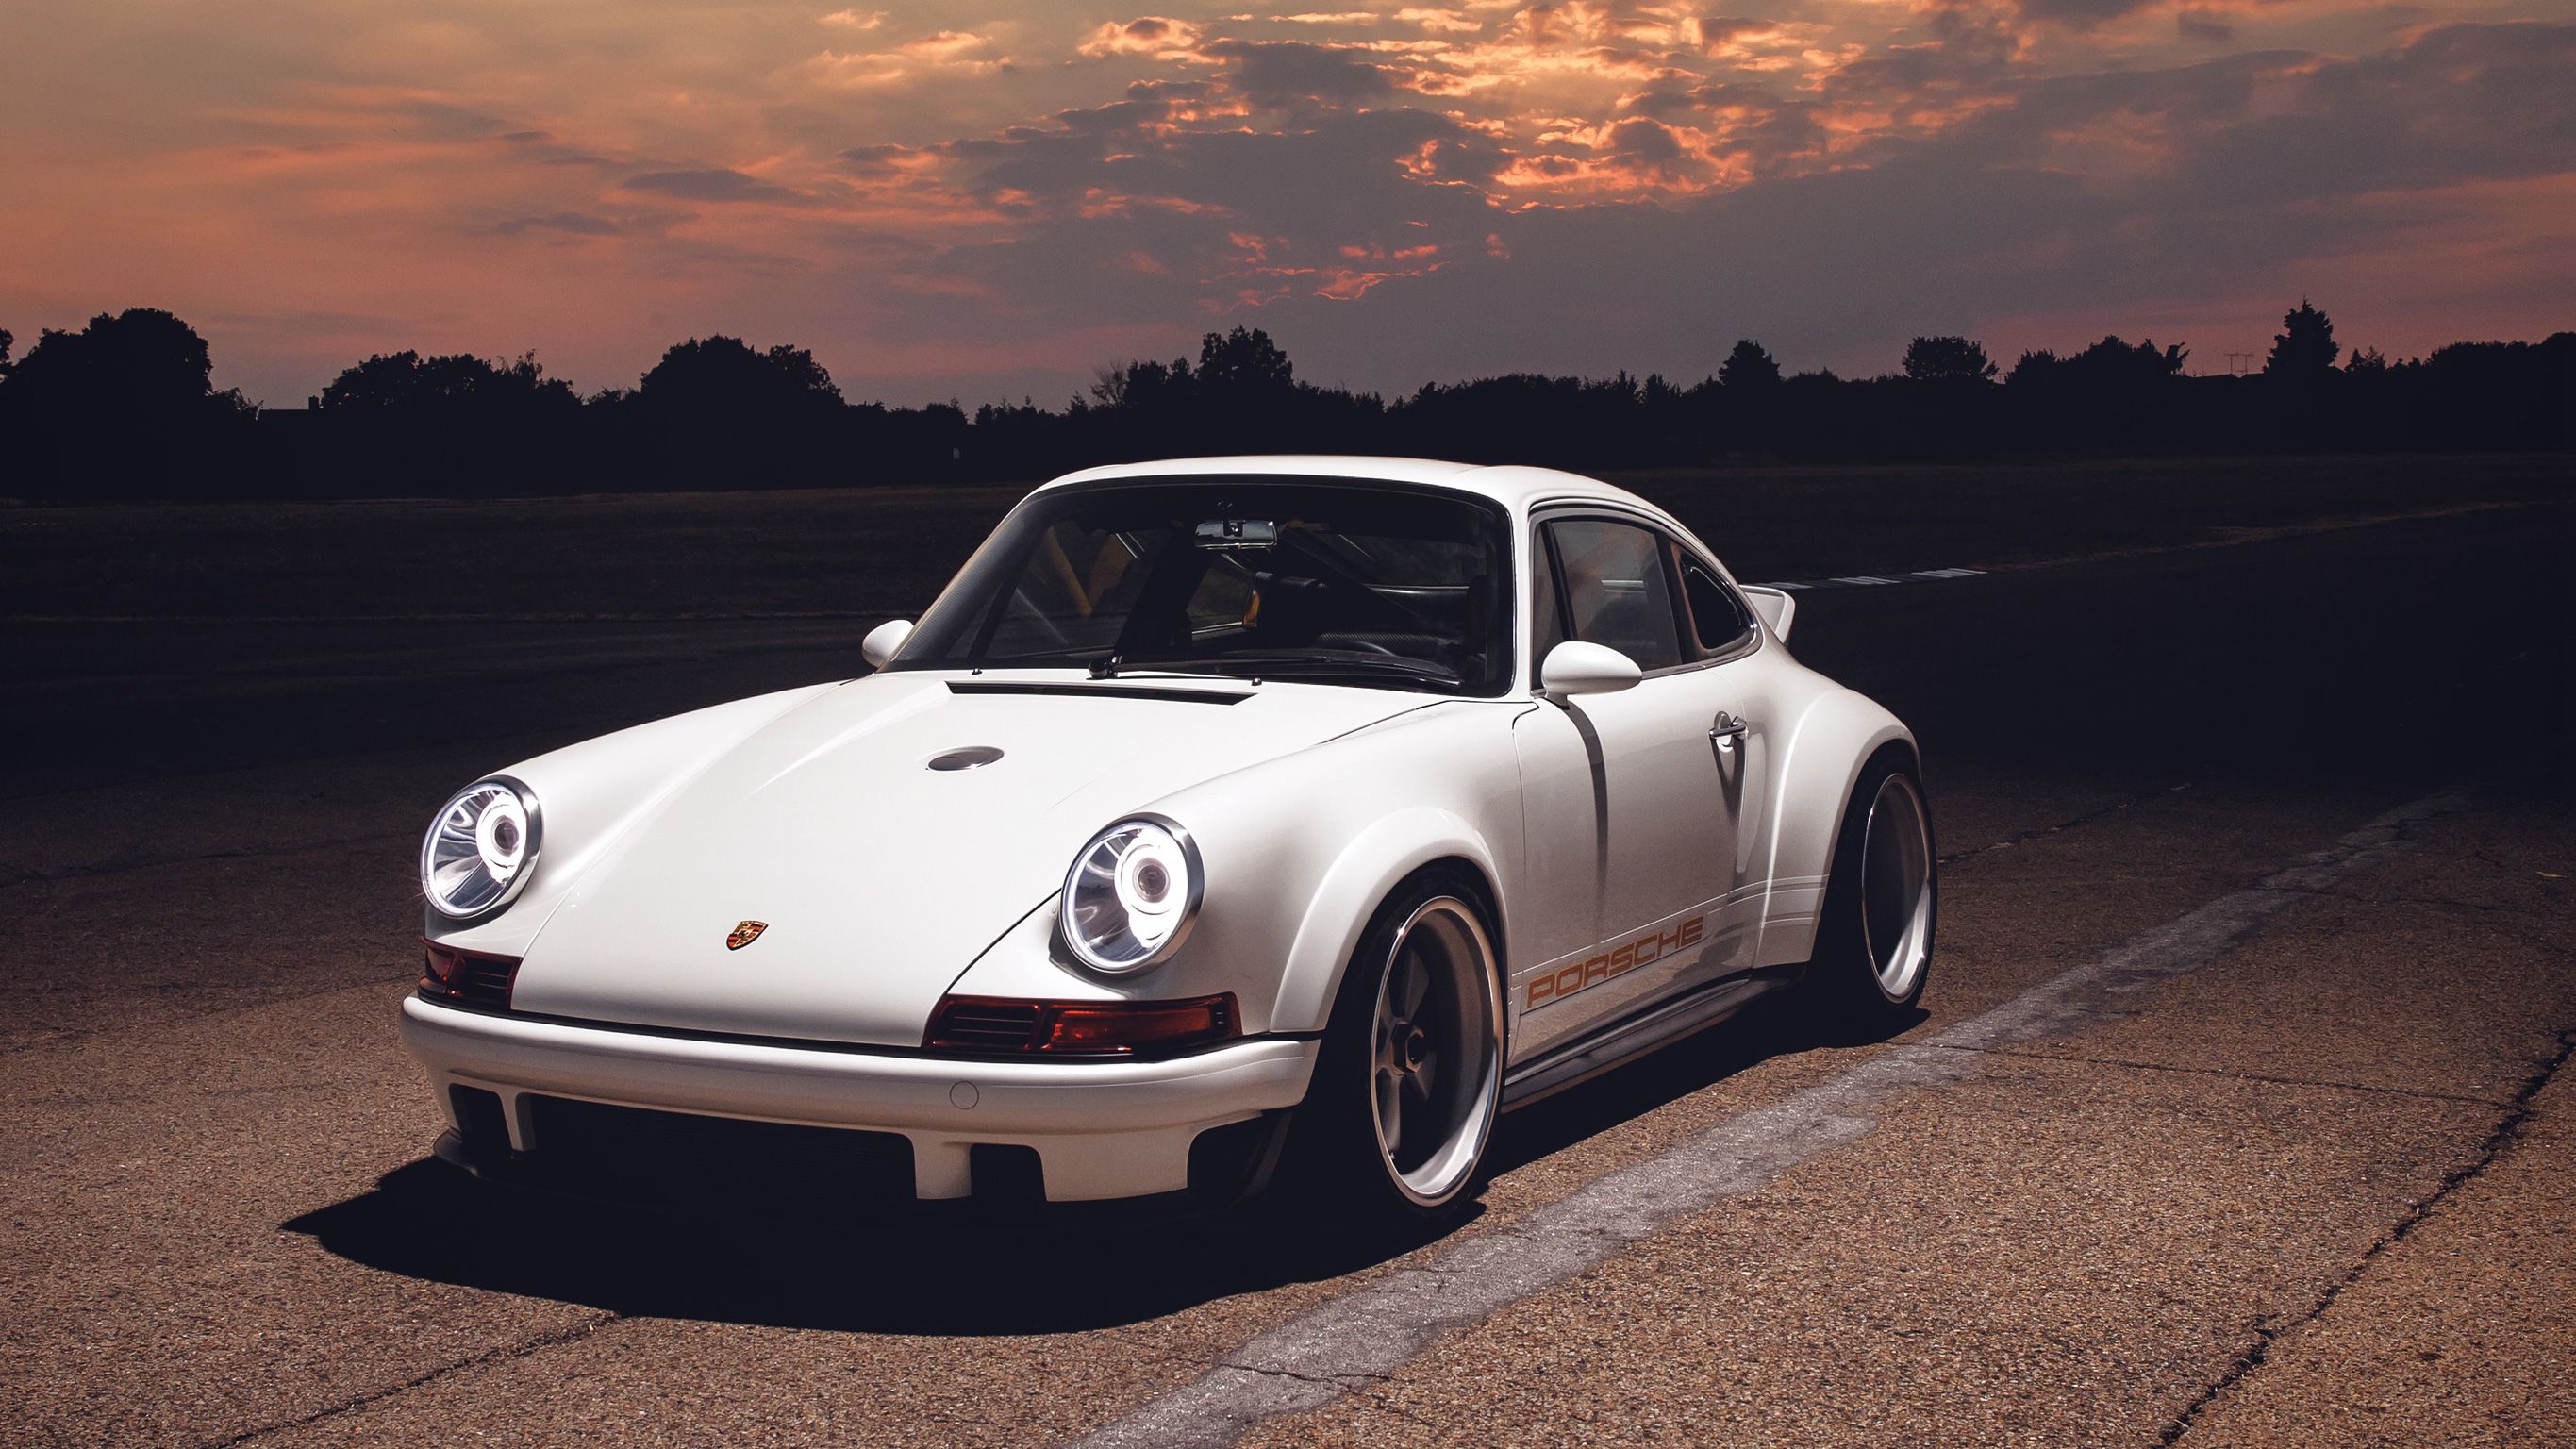 Porsche Singer Vehicle Design DLS HD Cars, 4k Wallpaper, Image, Background, Photo and Picture